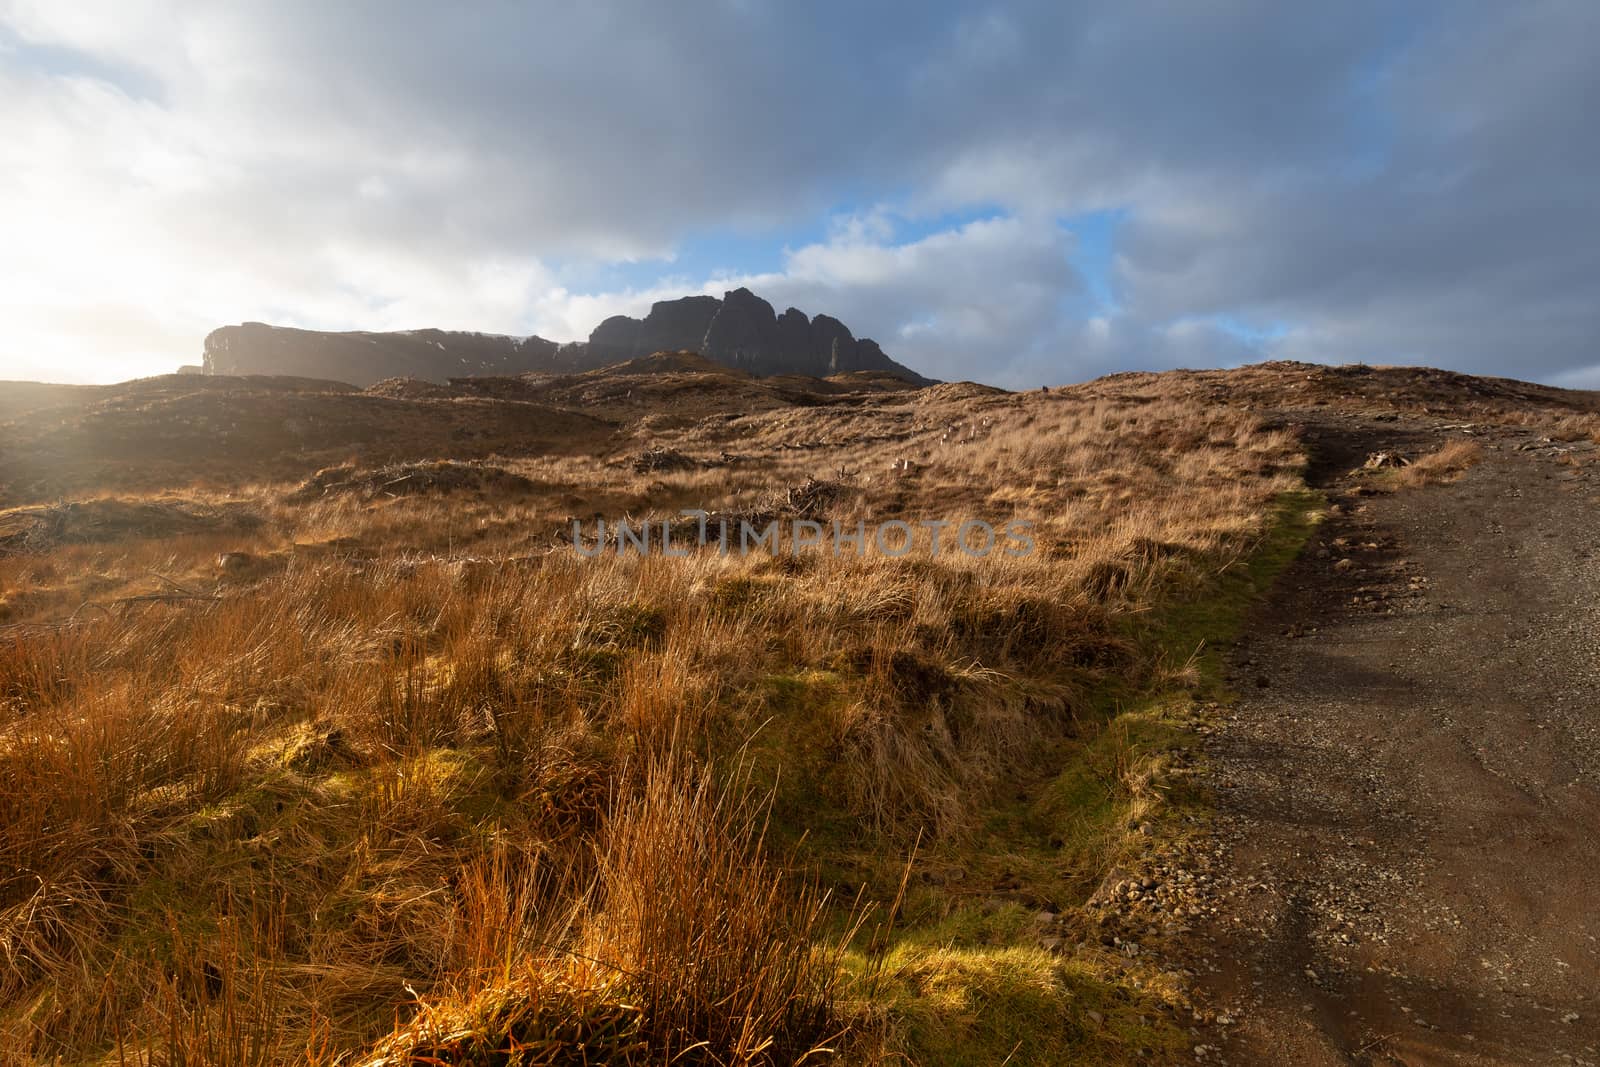 Path to the Old man of Storr Pinnacle Rock Isle of Skye Scotland by mlechanteur